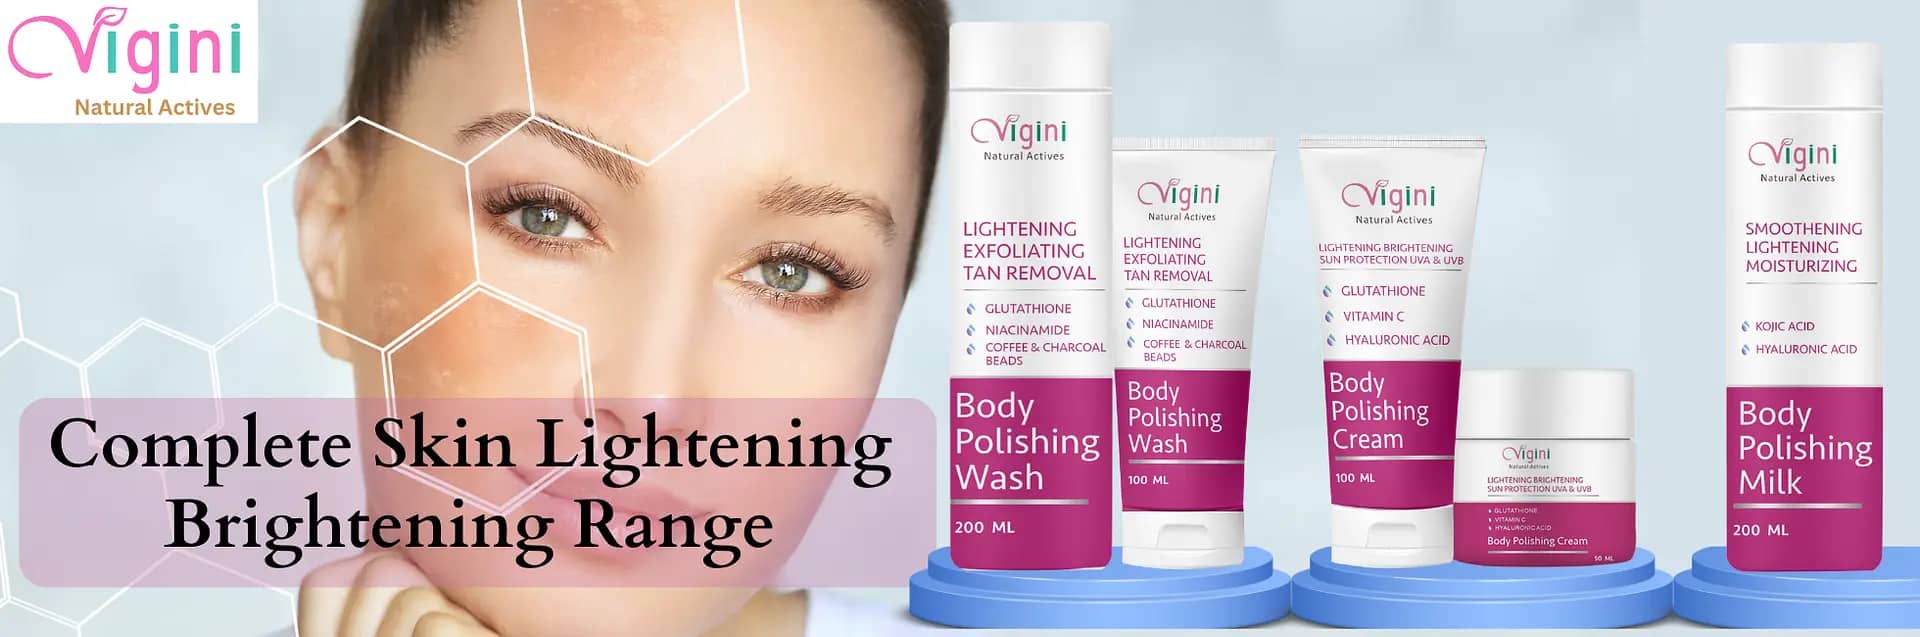 Unlock Radiant Beauty: Exploring Dermistry Body, Face, and Lip Care Products Alongside Vigini Wellness Range